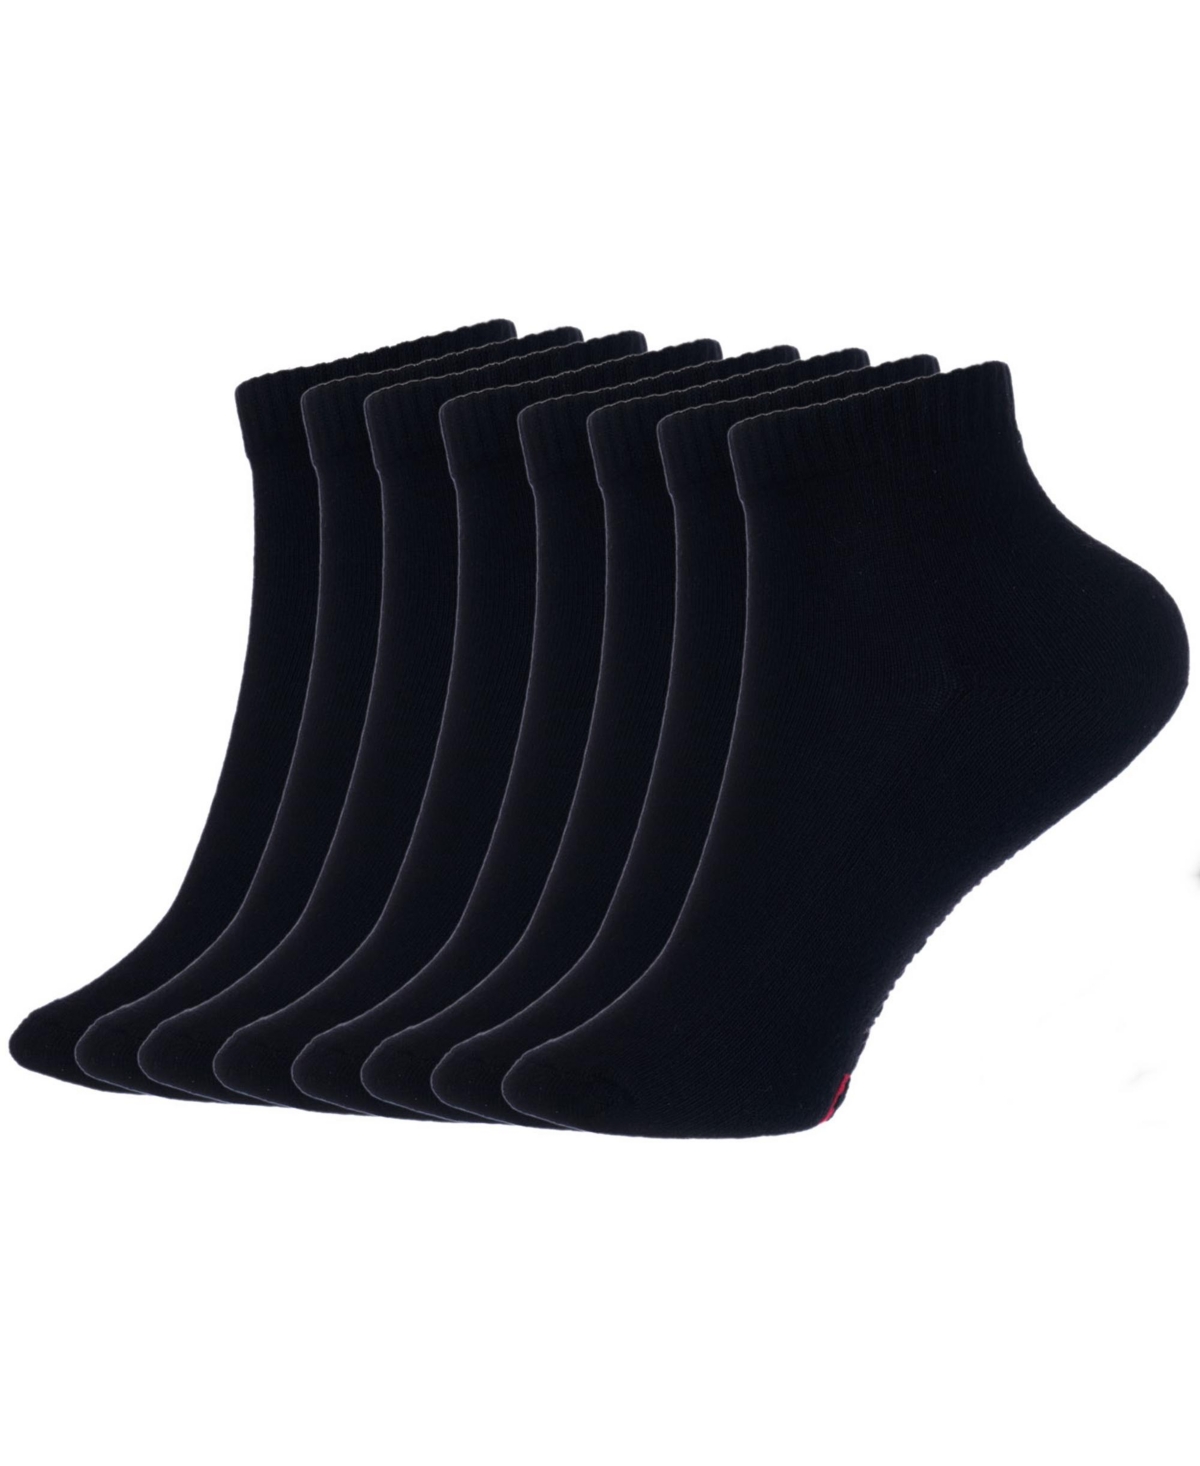 Mens 8 Pack Ankle Socks Low Cut Cotton Athletic Sock Shoe Size 6-12 - Black white